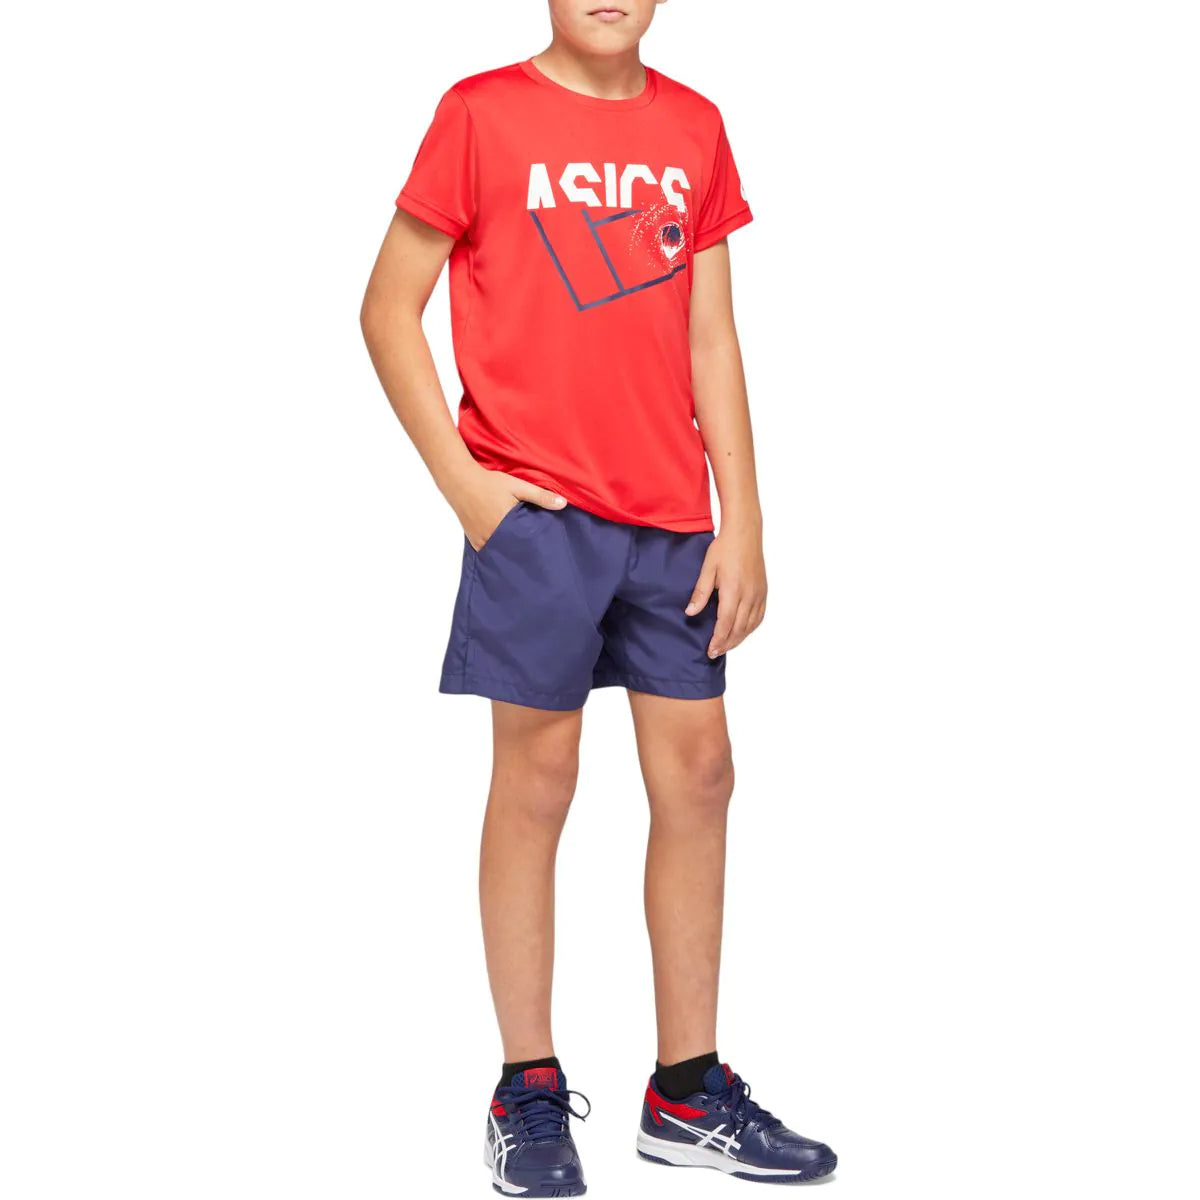 Asics Tennis B Gpx T for Kids - Sporty Pro